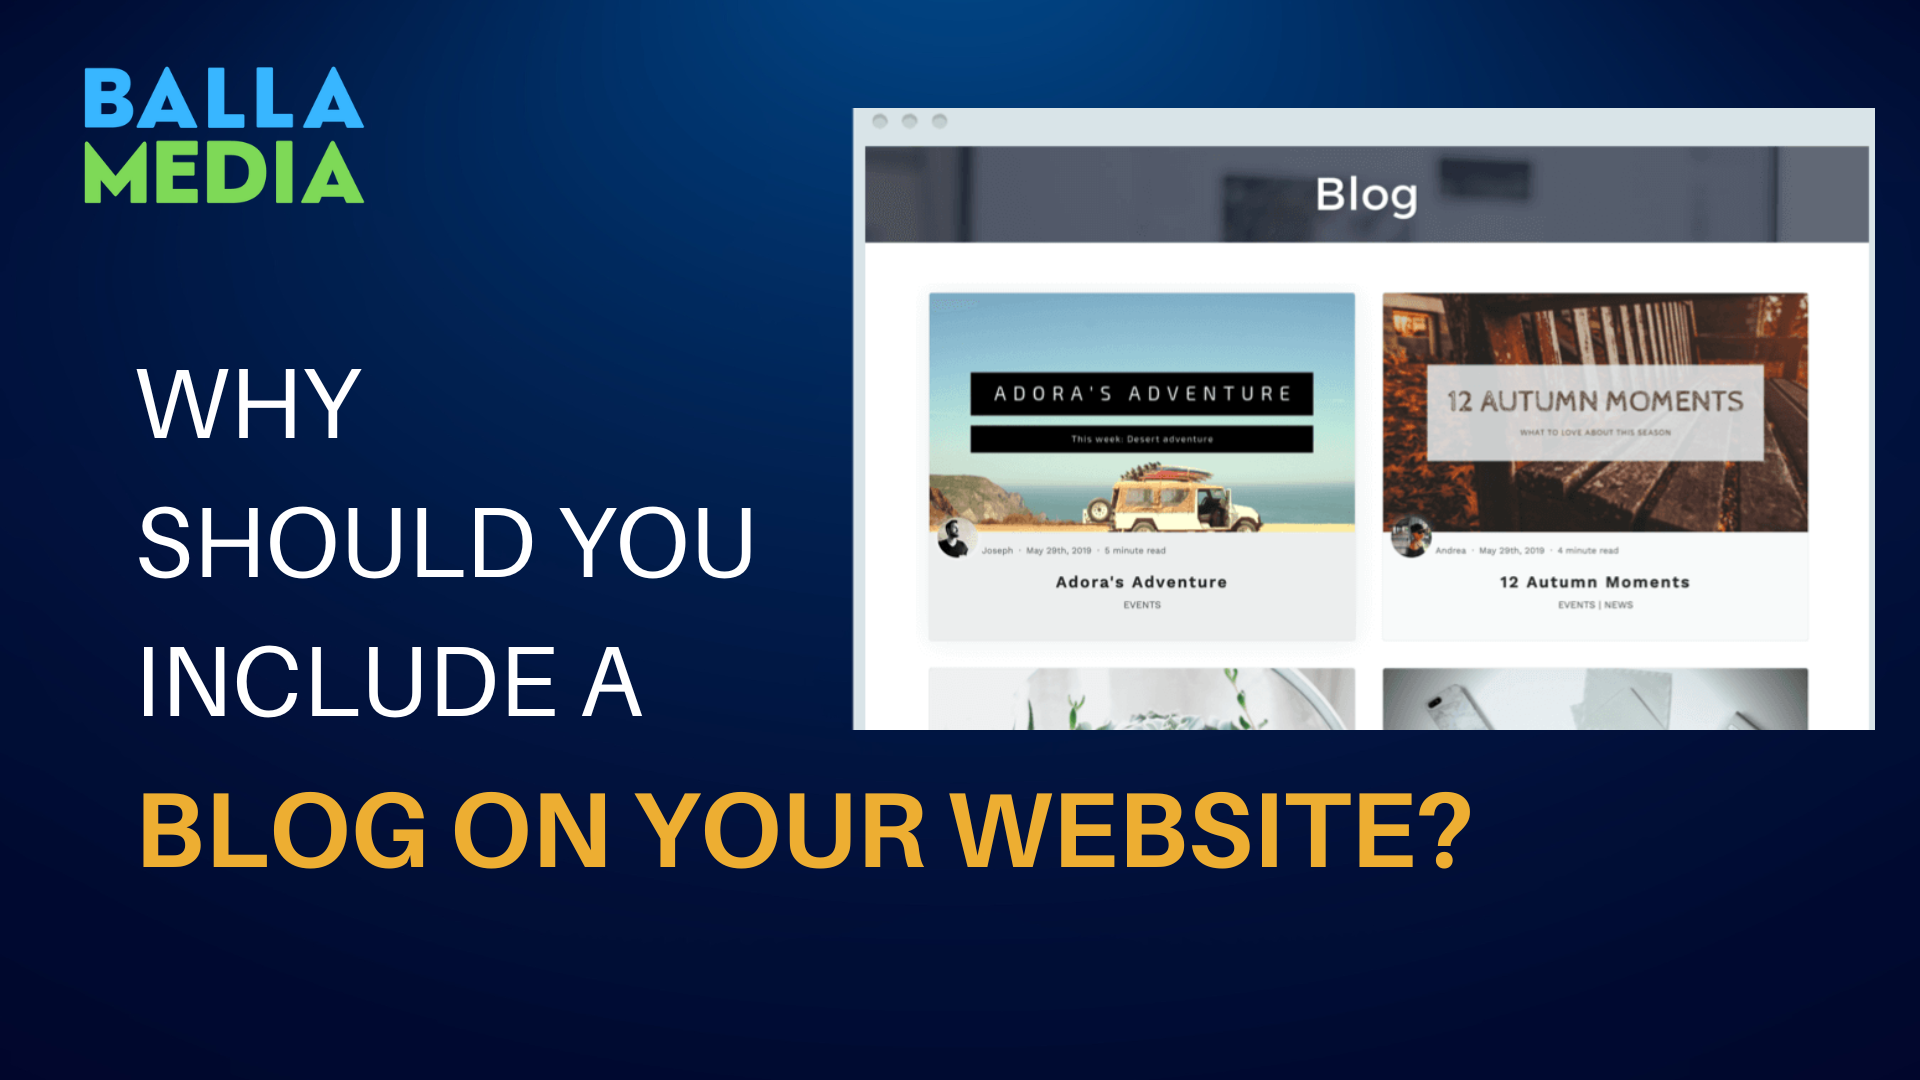 Blog on your website